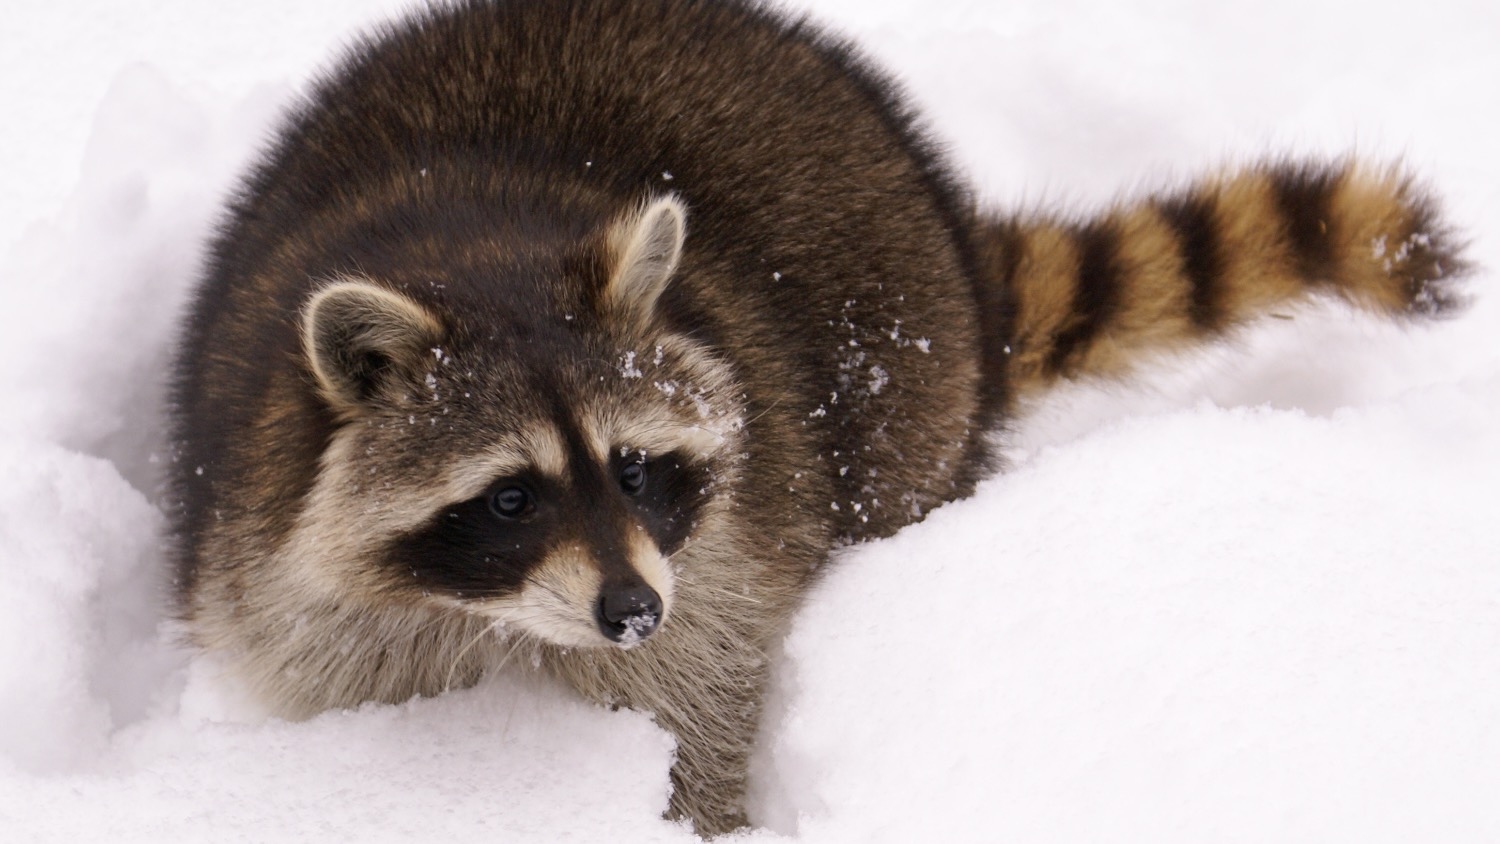 Raccoon walking in snow.